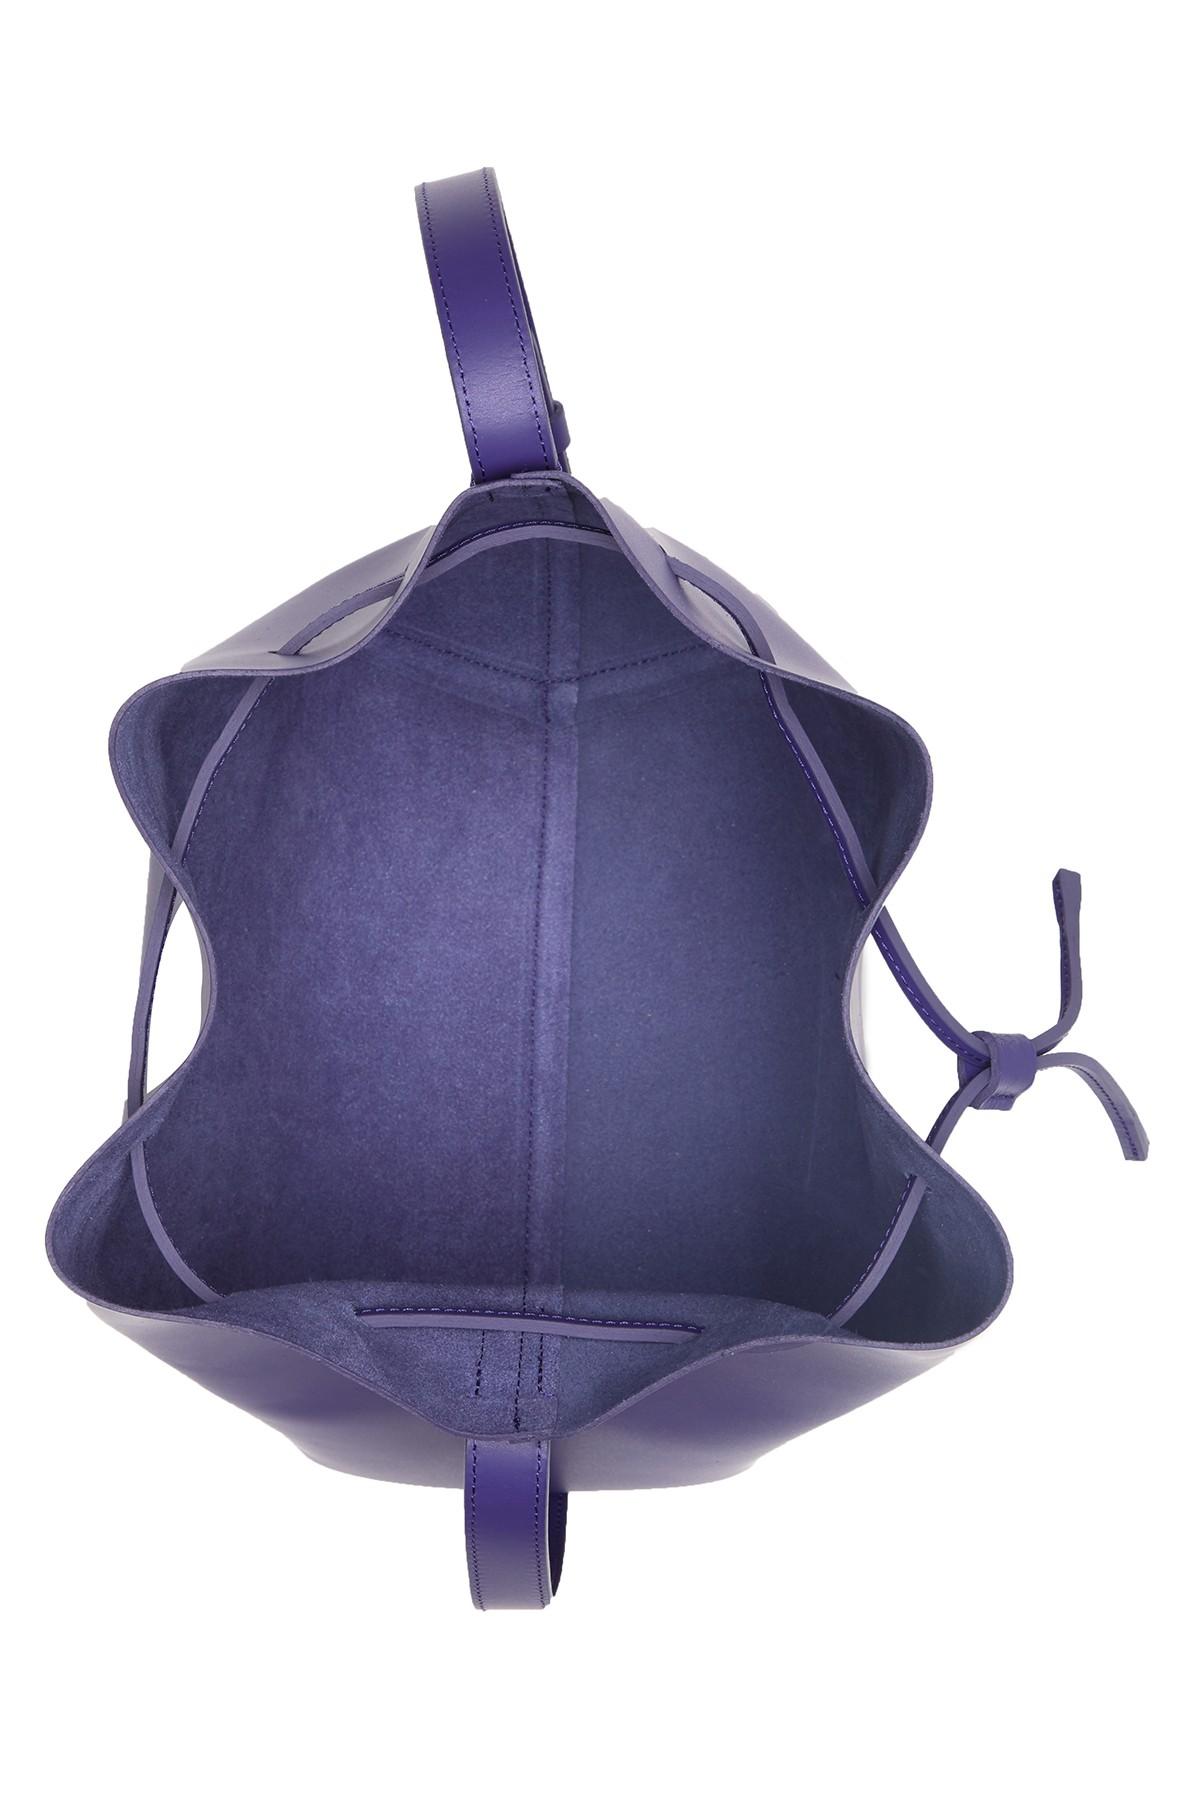 Lancaster Paris Matte Smooth Leather Bucket Bag in Purple - Lyst